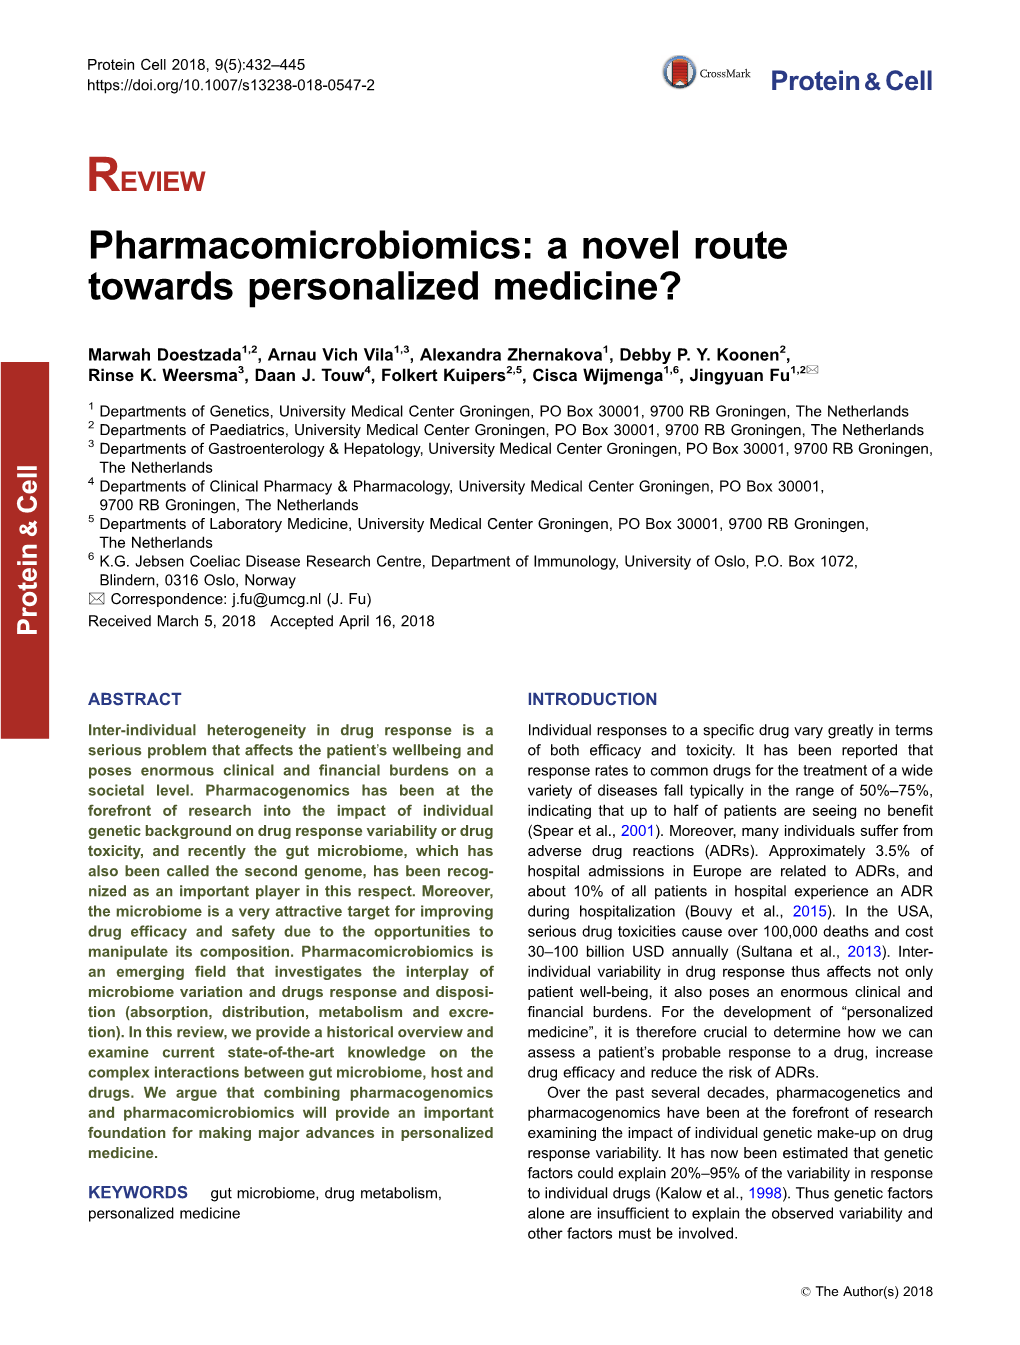 Pharmacomicrobiomics: a Novel Route Towards Personalized Medicine?